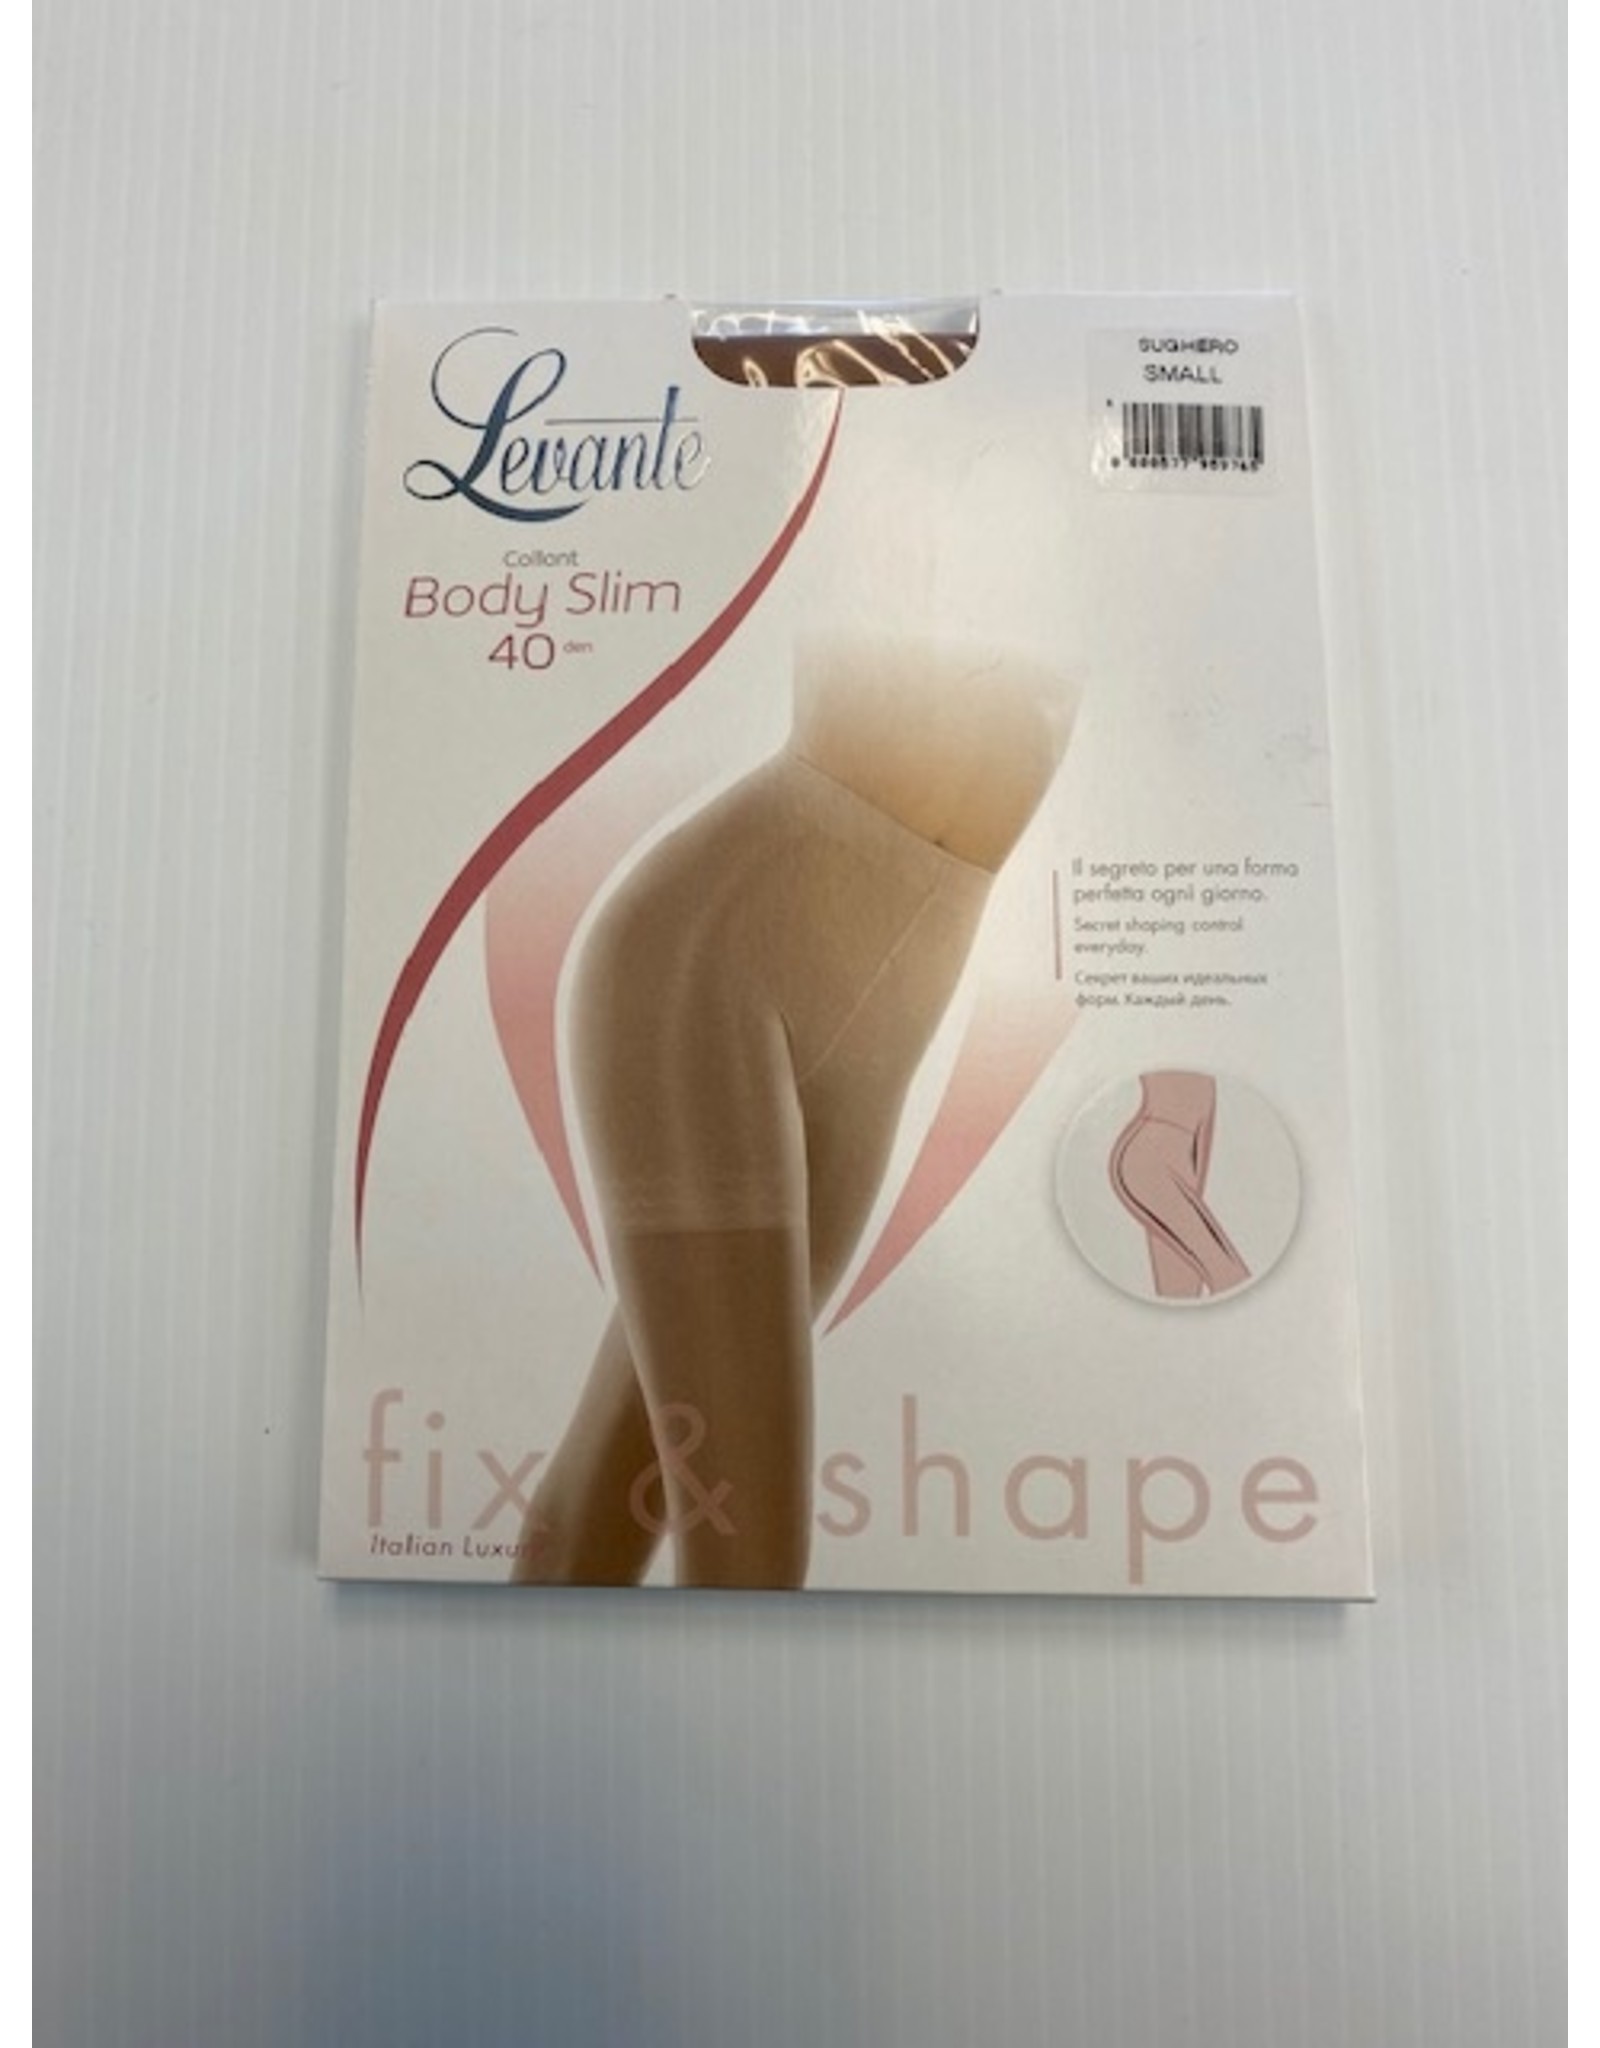 Levante Levante Women's Body Slim 40 denier Shaper Pantyhose